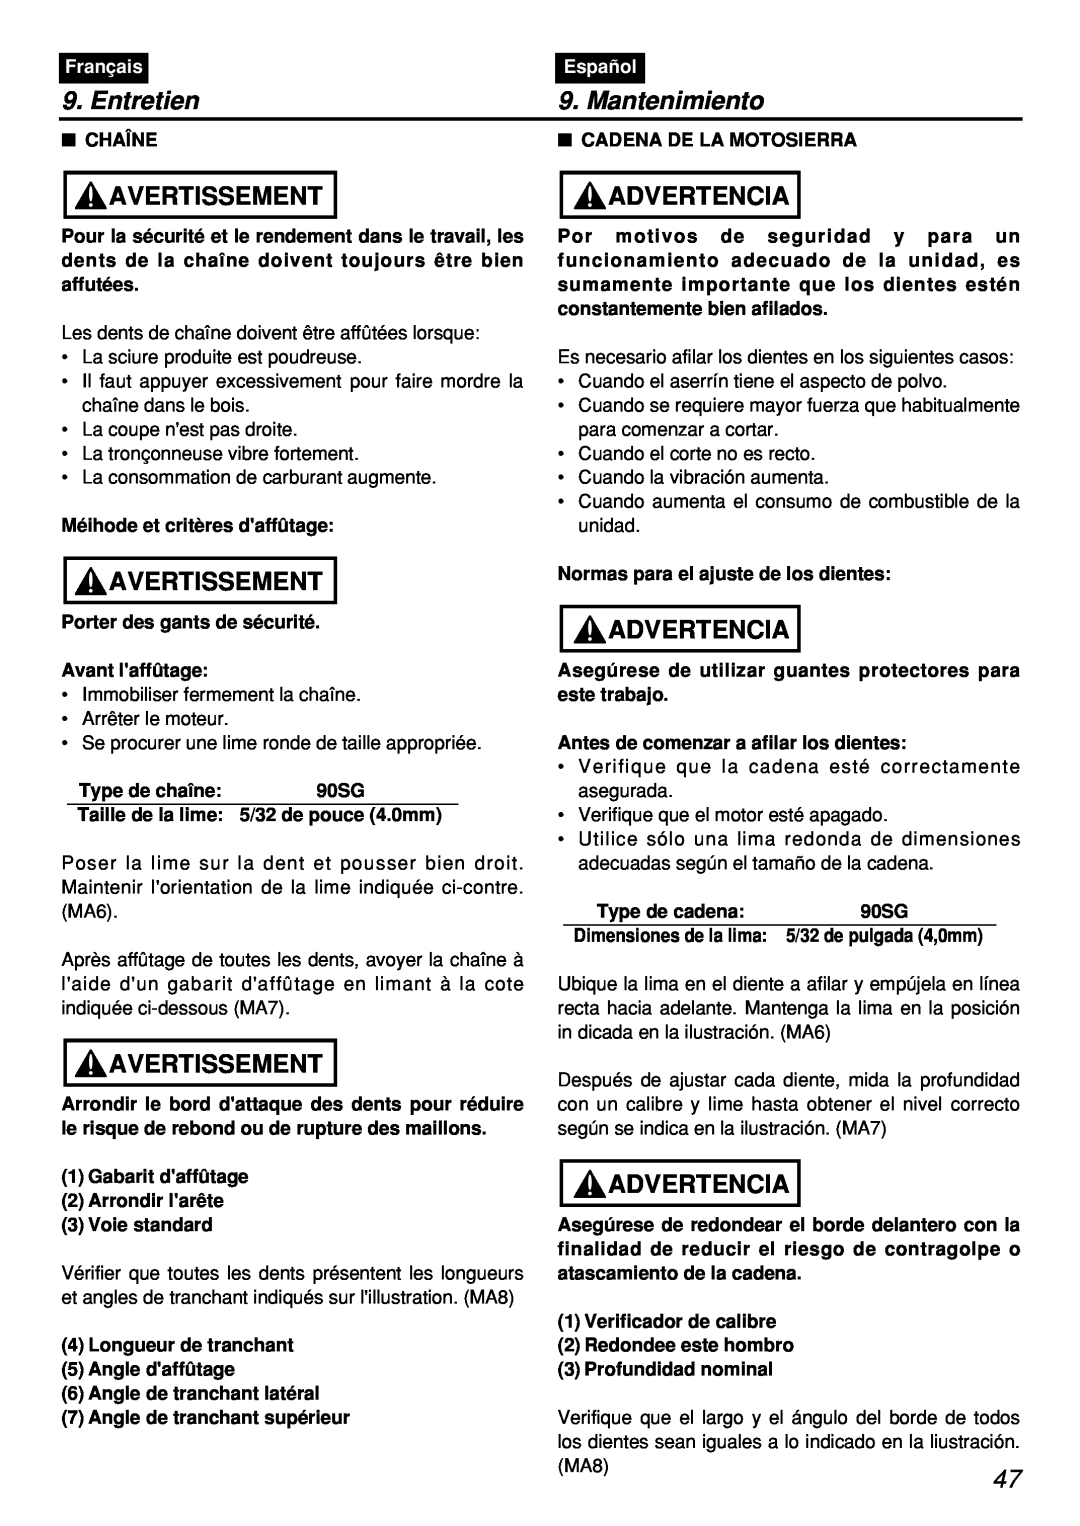 Zenoah PSZ2401, PSZ2401-CA manual Entretien, Mantenimiento, Avertissement, Advertencia, Français, Español, Chaîne 